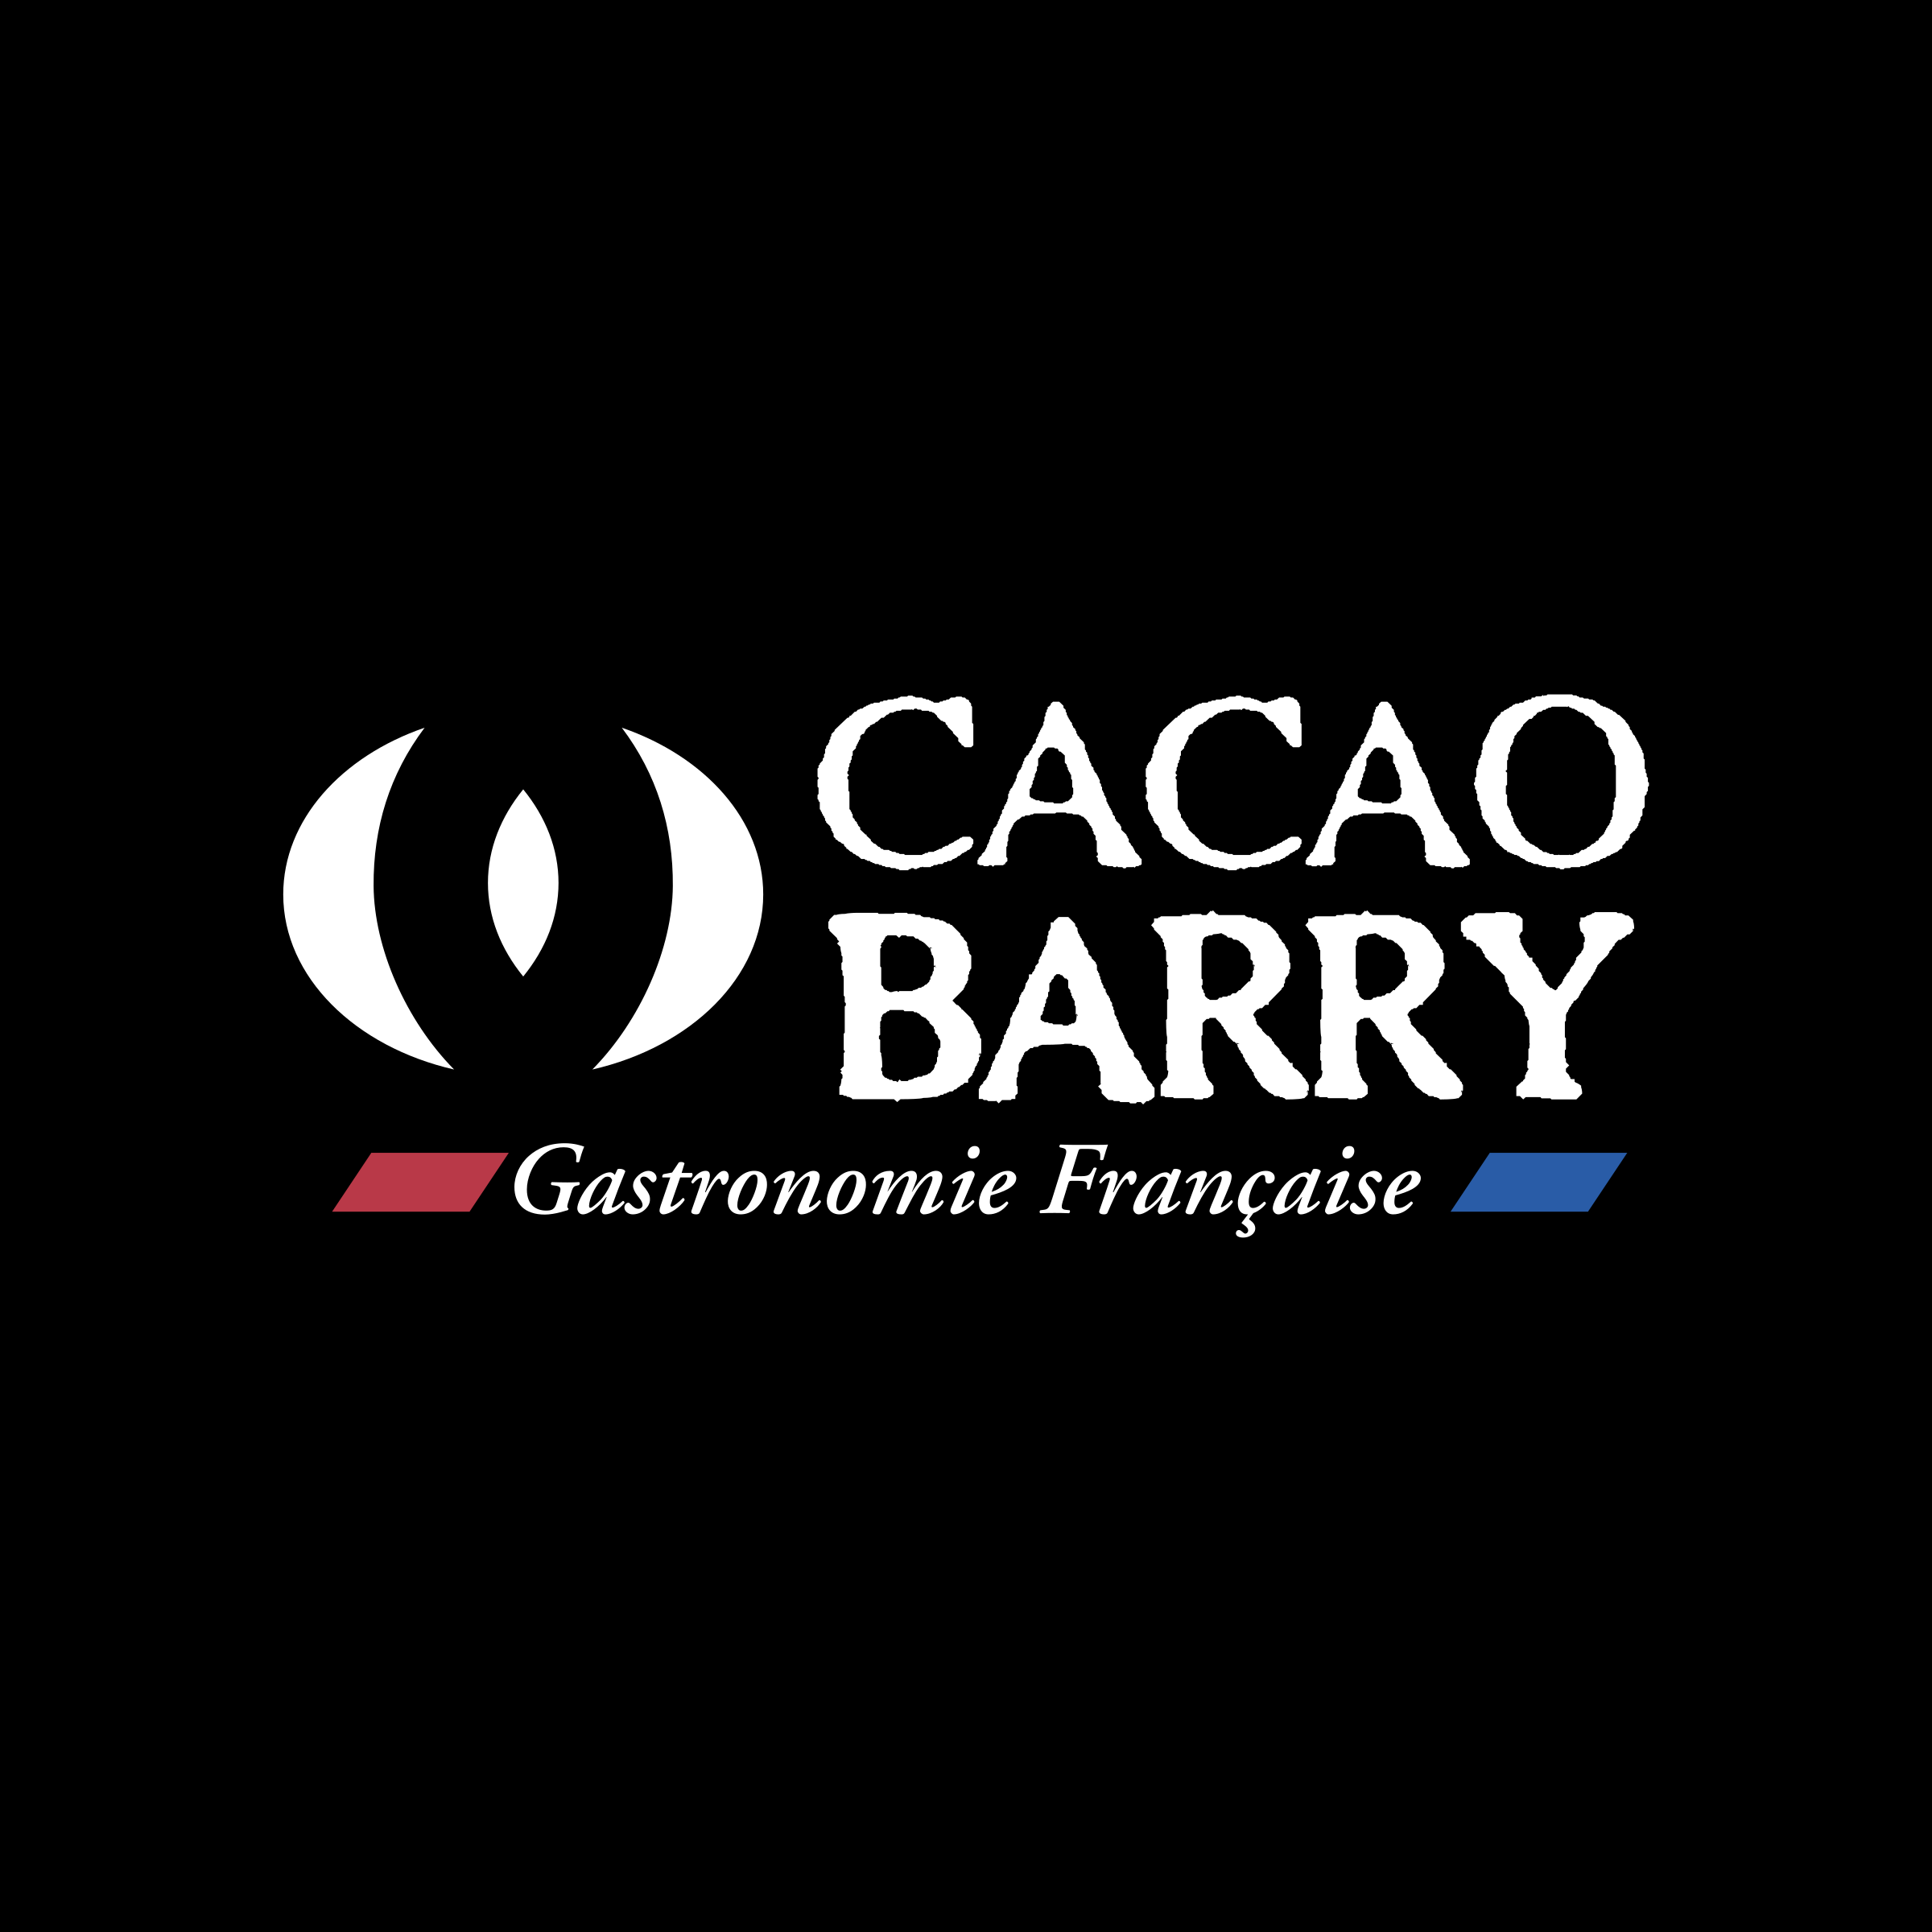 Barry Logo - Cacao Barry Logo PNG Transparent & SVG Vector